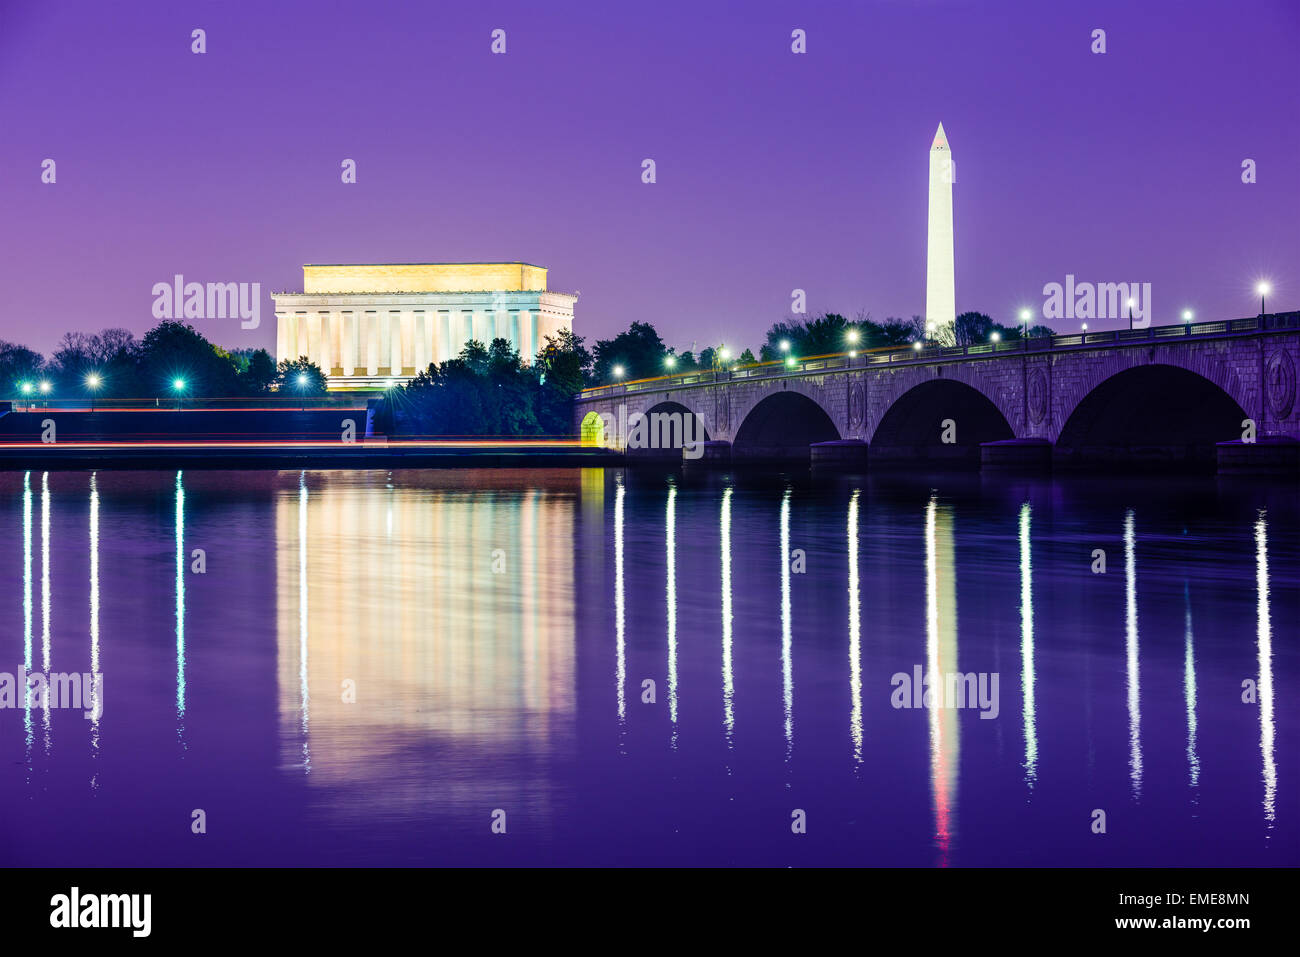 Washington, D.C. from across the Potomac River. Stock Photo